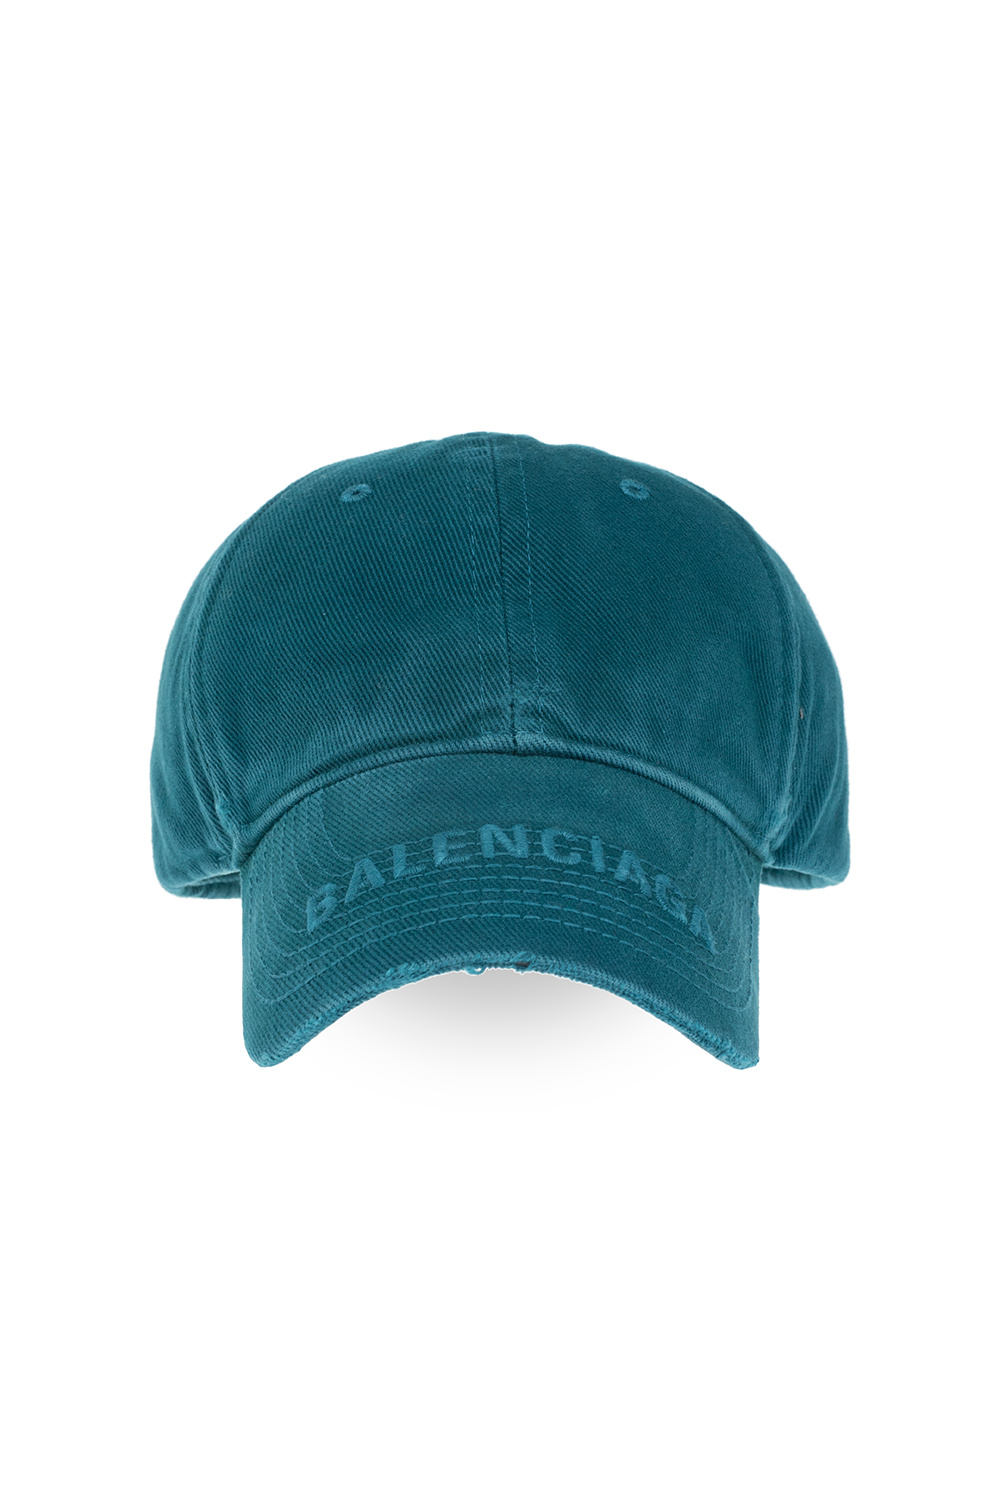 Balenciaga this six panel cap comes from